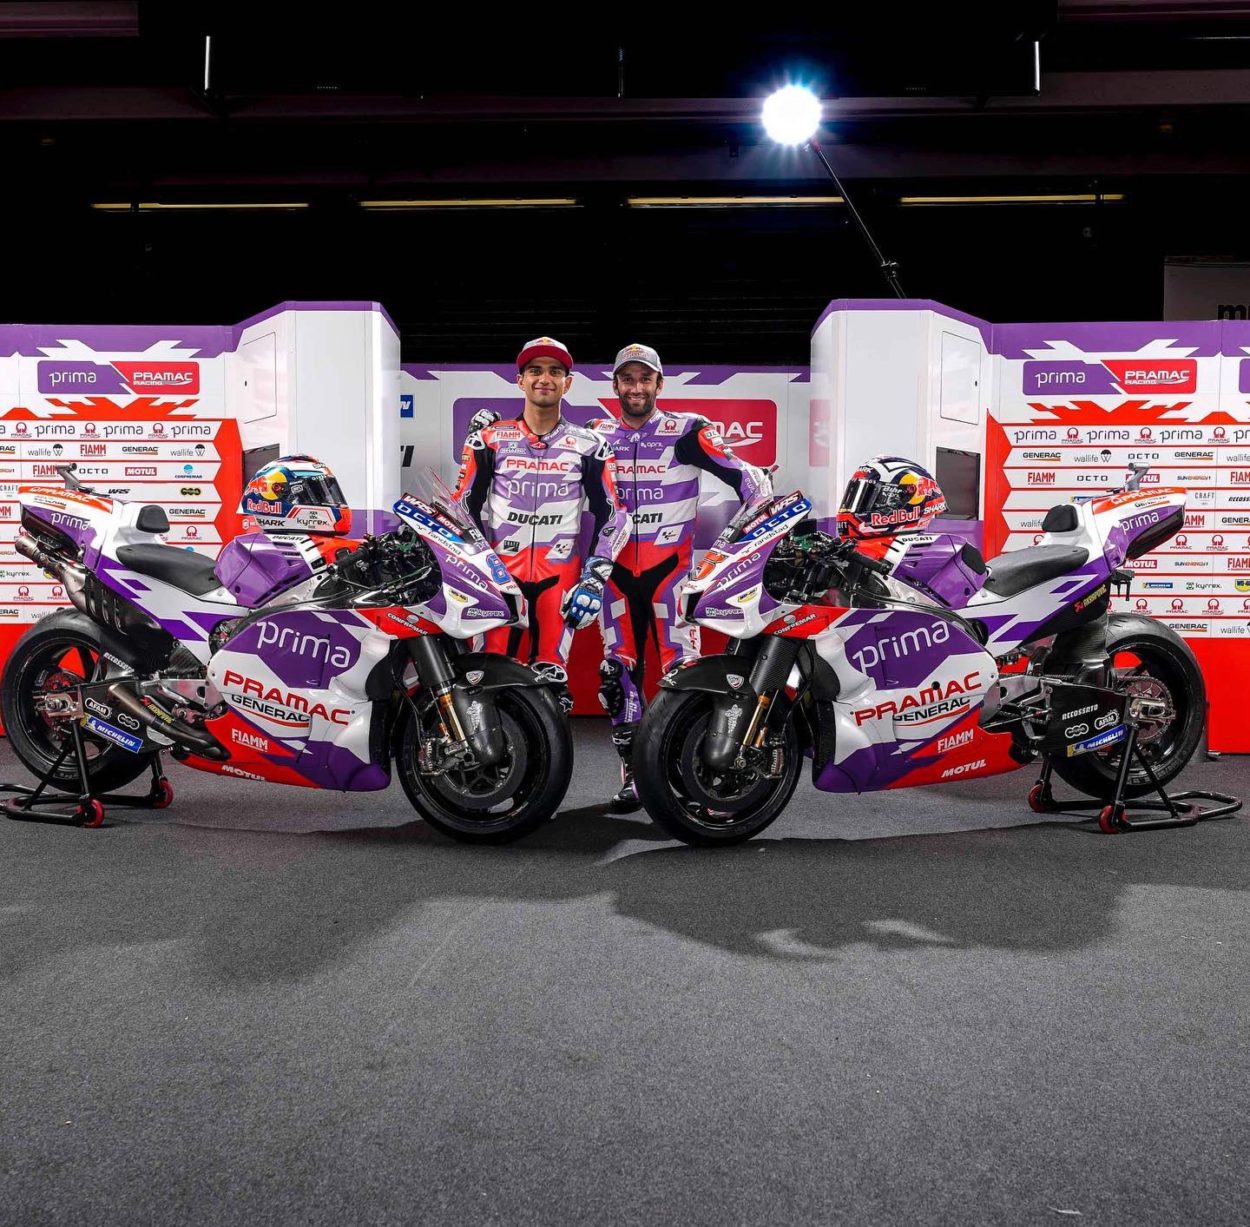 MotoGP | Nuova partnership tra Prima Assicurazioni e Pramac, presentata la nuova livrea